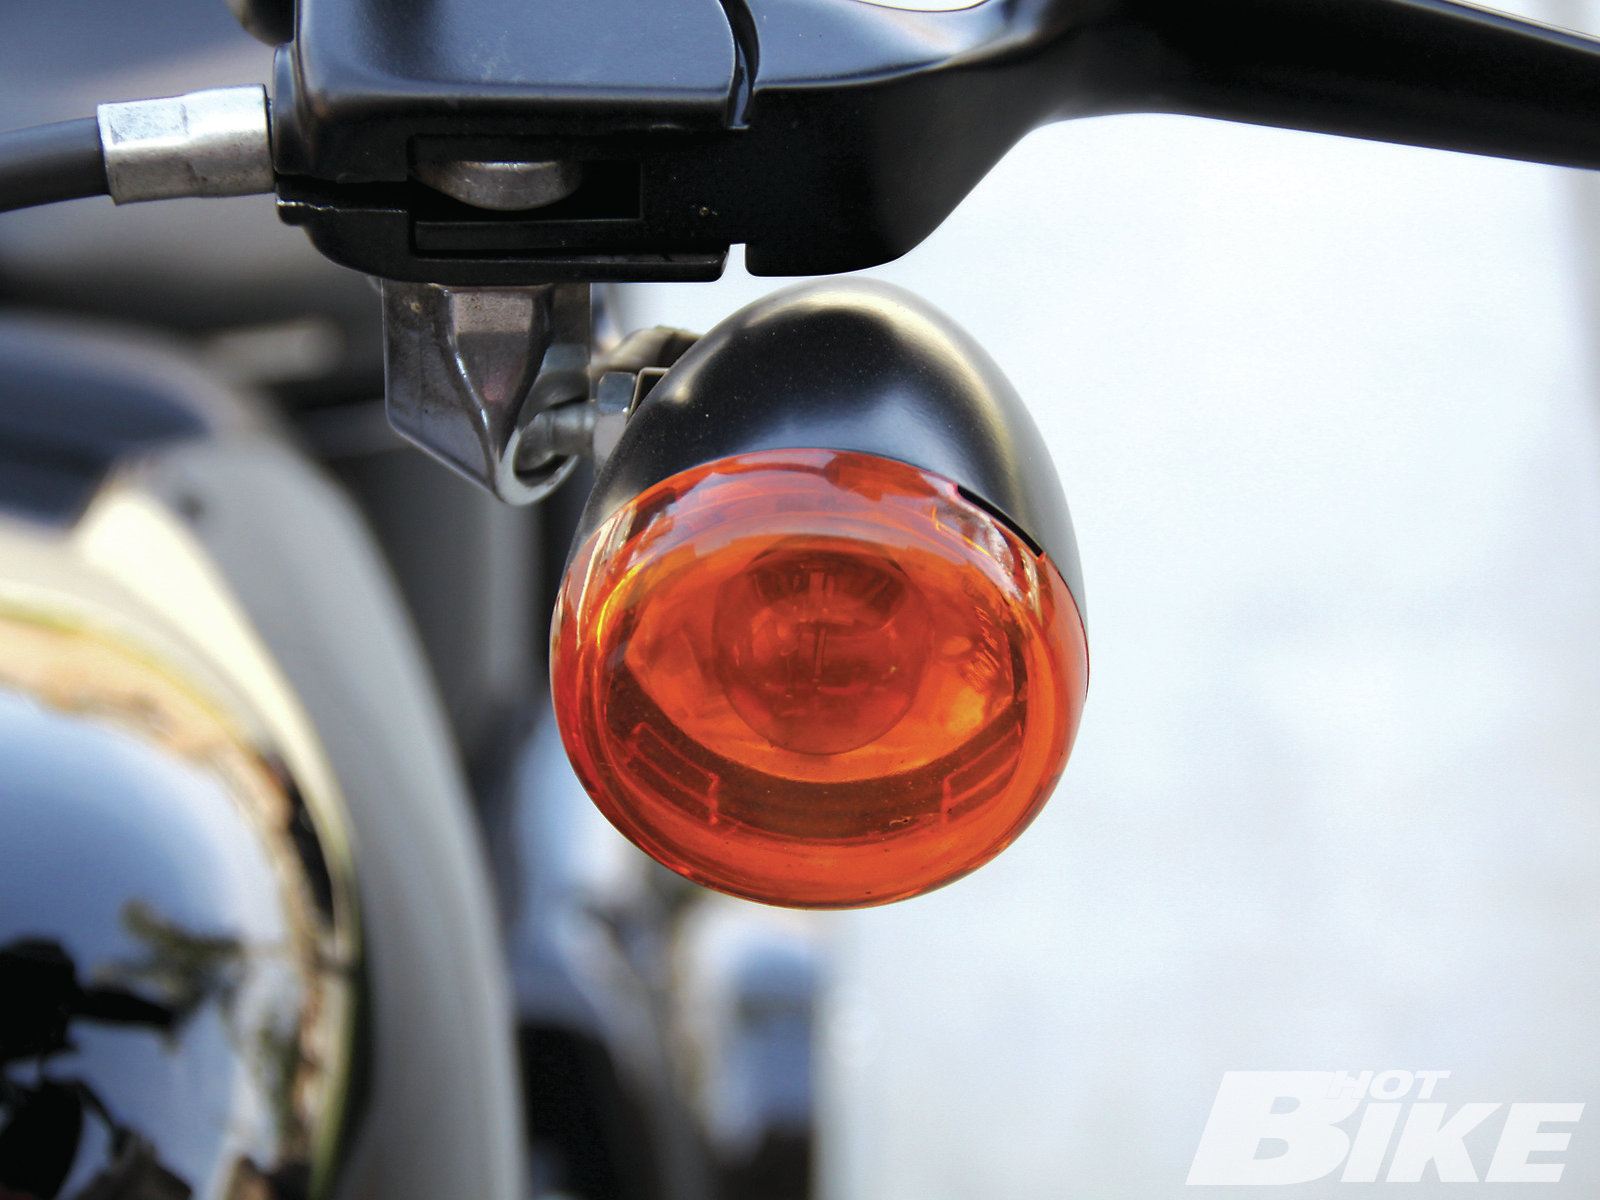 Blackline Black-Out | One Step Closer to the Darkside Part 2 - Hot Bike Magazine